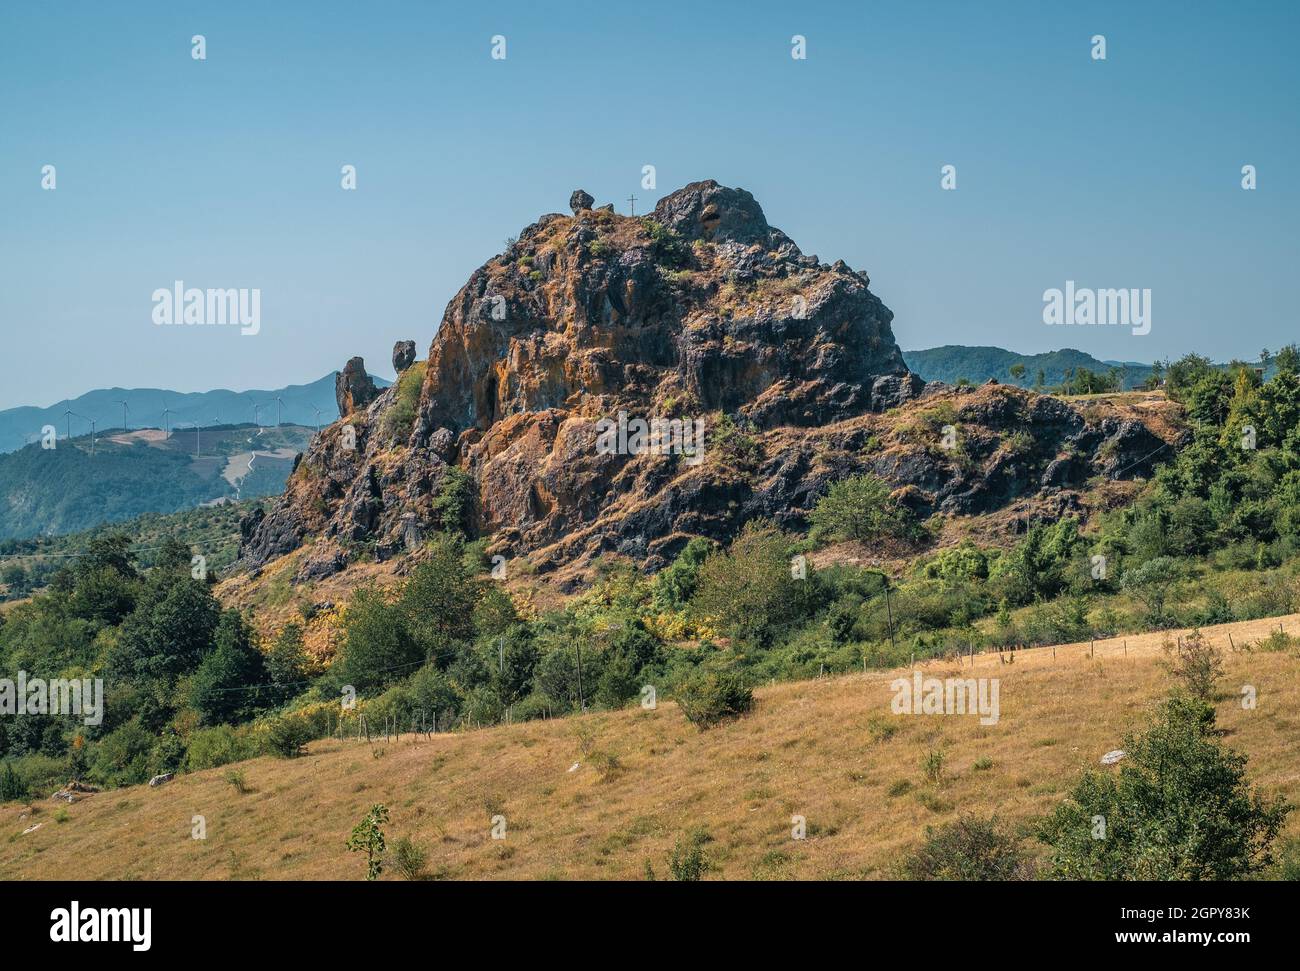 San Zanobi Stone - Sasso di San Zanobi - ophiolites rock formation in the municipality of Firenzuola, Tuscany, Italy Stock Photo